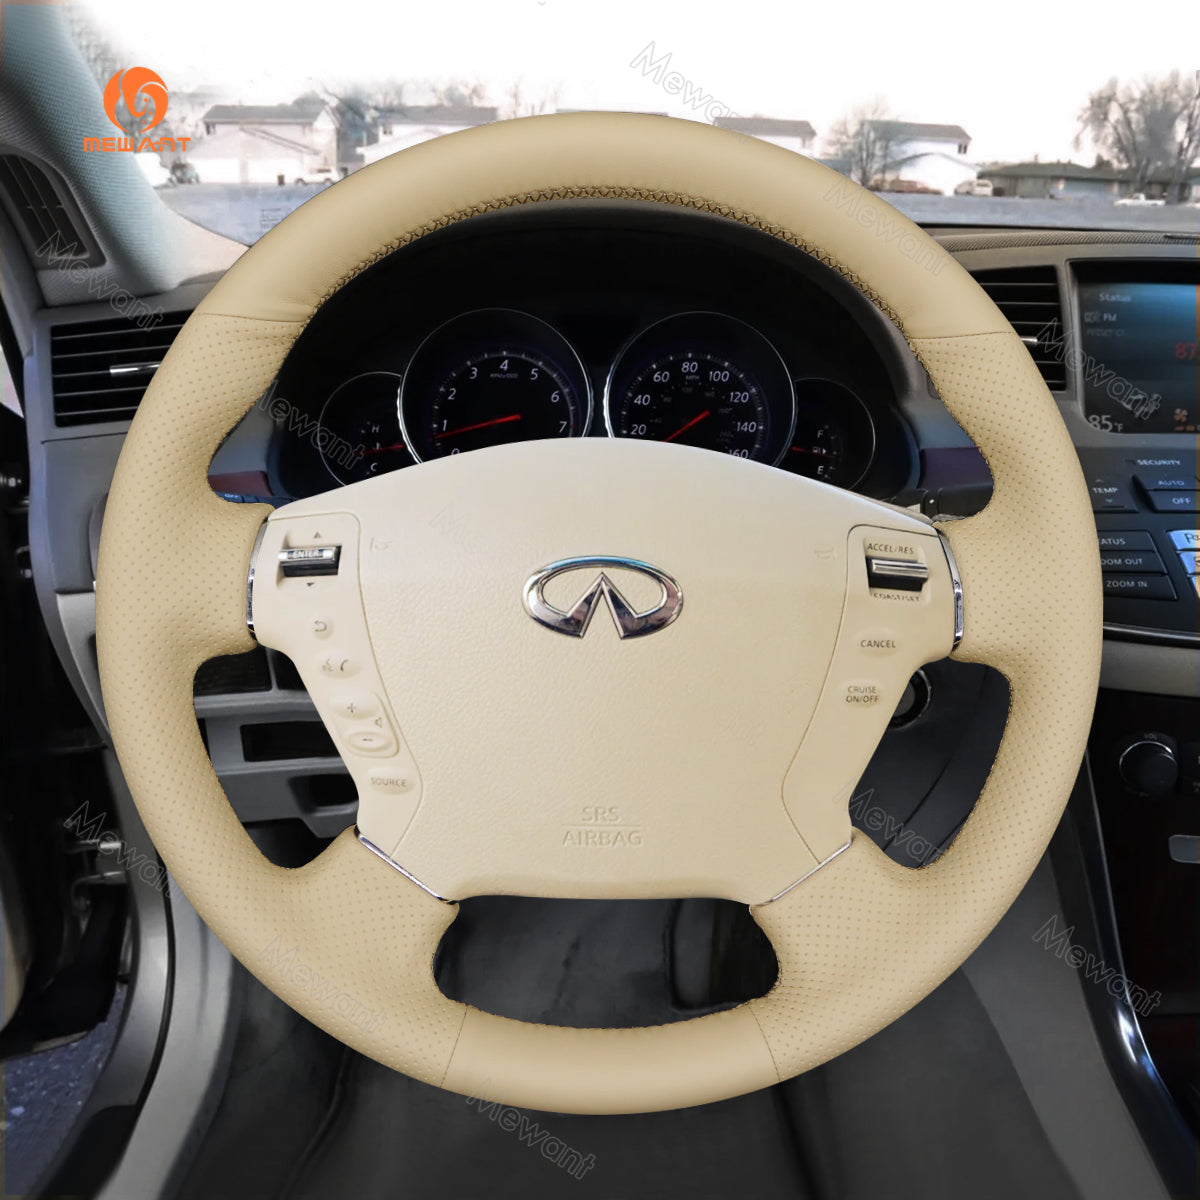 Car Steering Wheel Cover for Nissan Fuga Cima 2002-2008